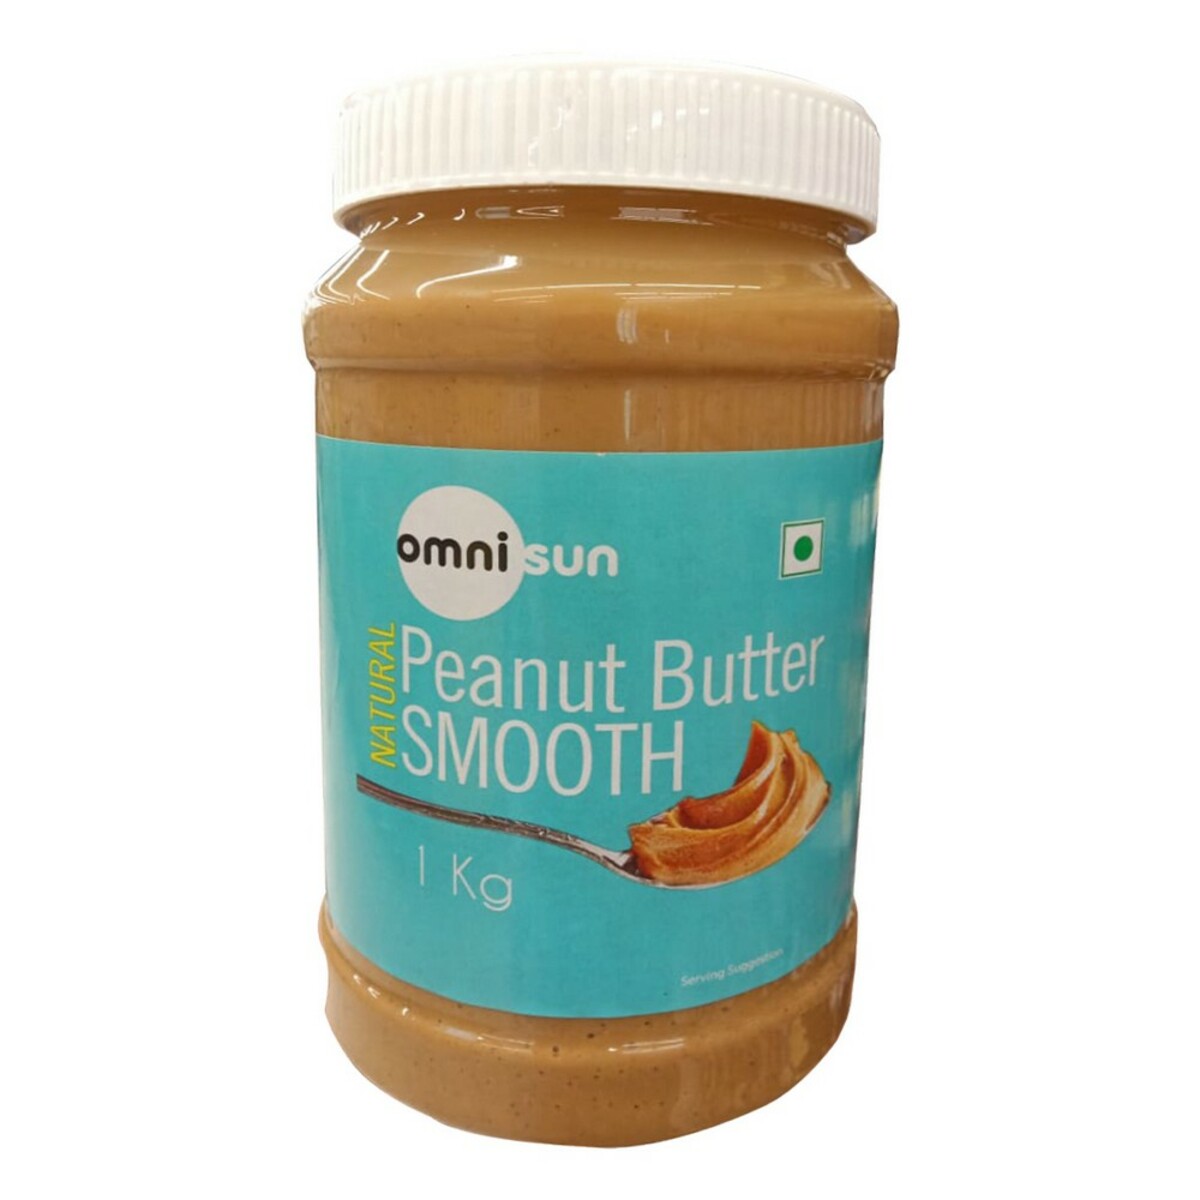 Omnisun Peanut Butter Smooth Natural 1Kg